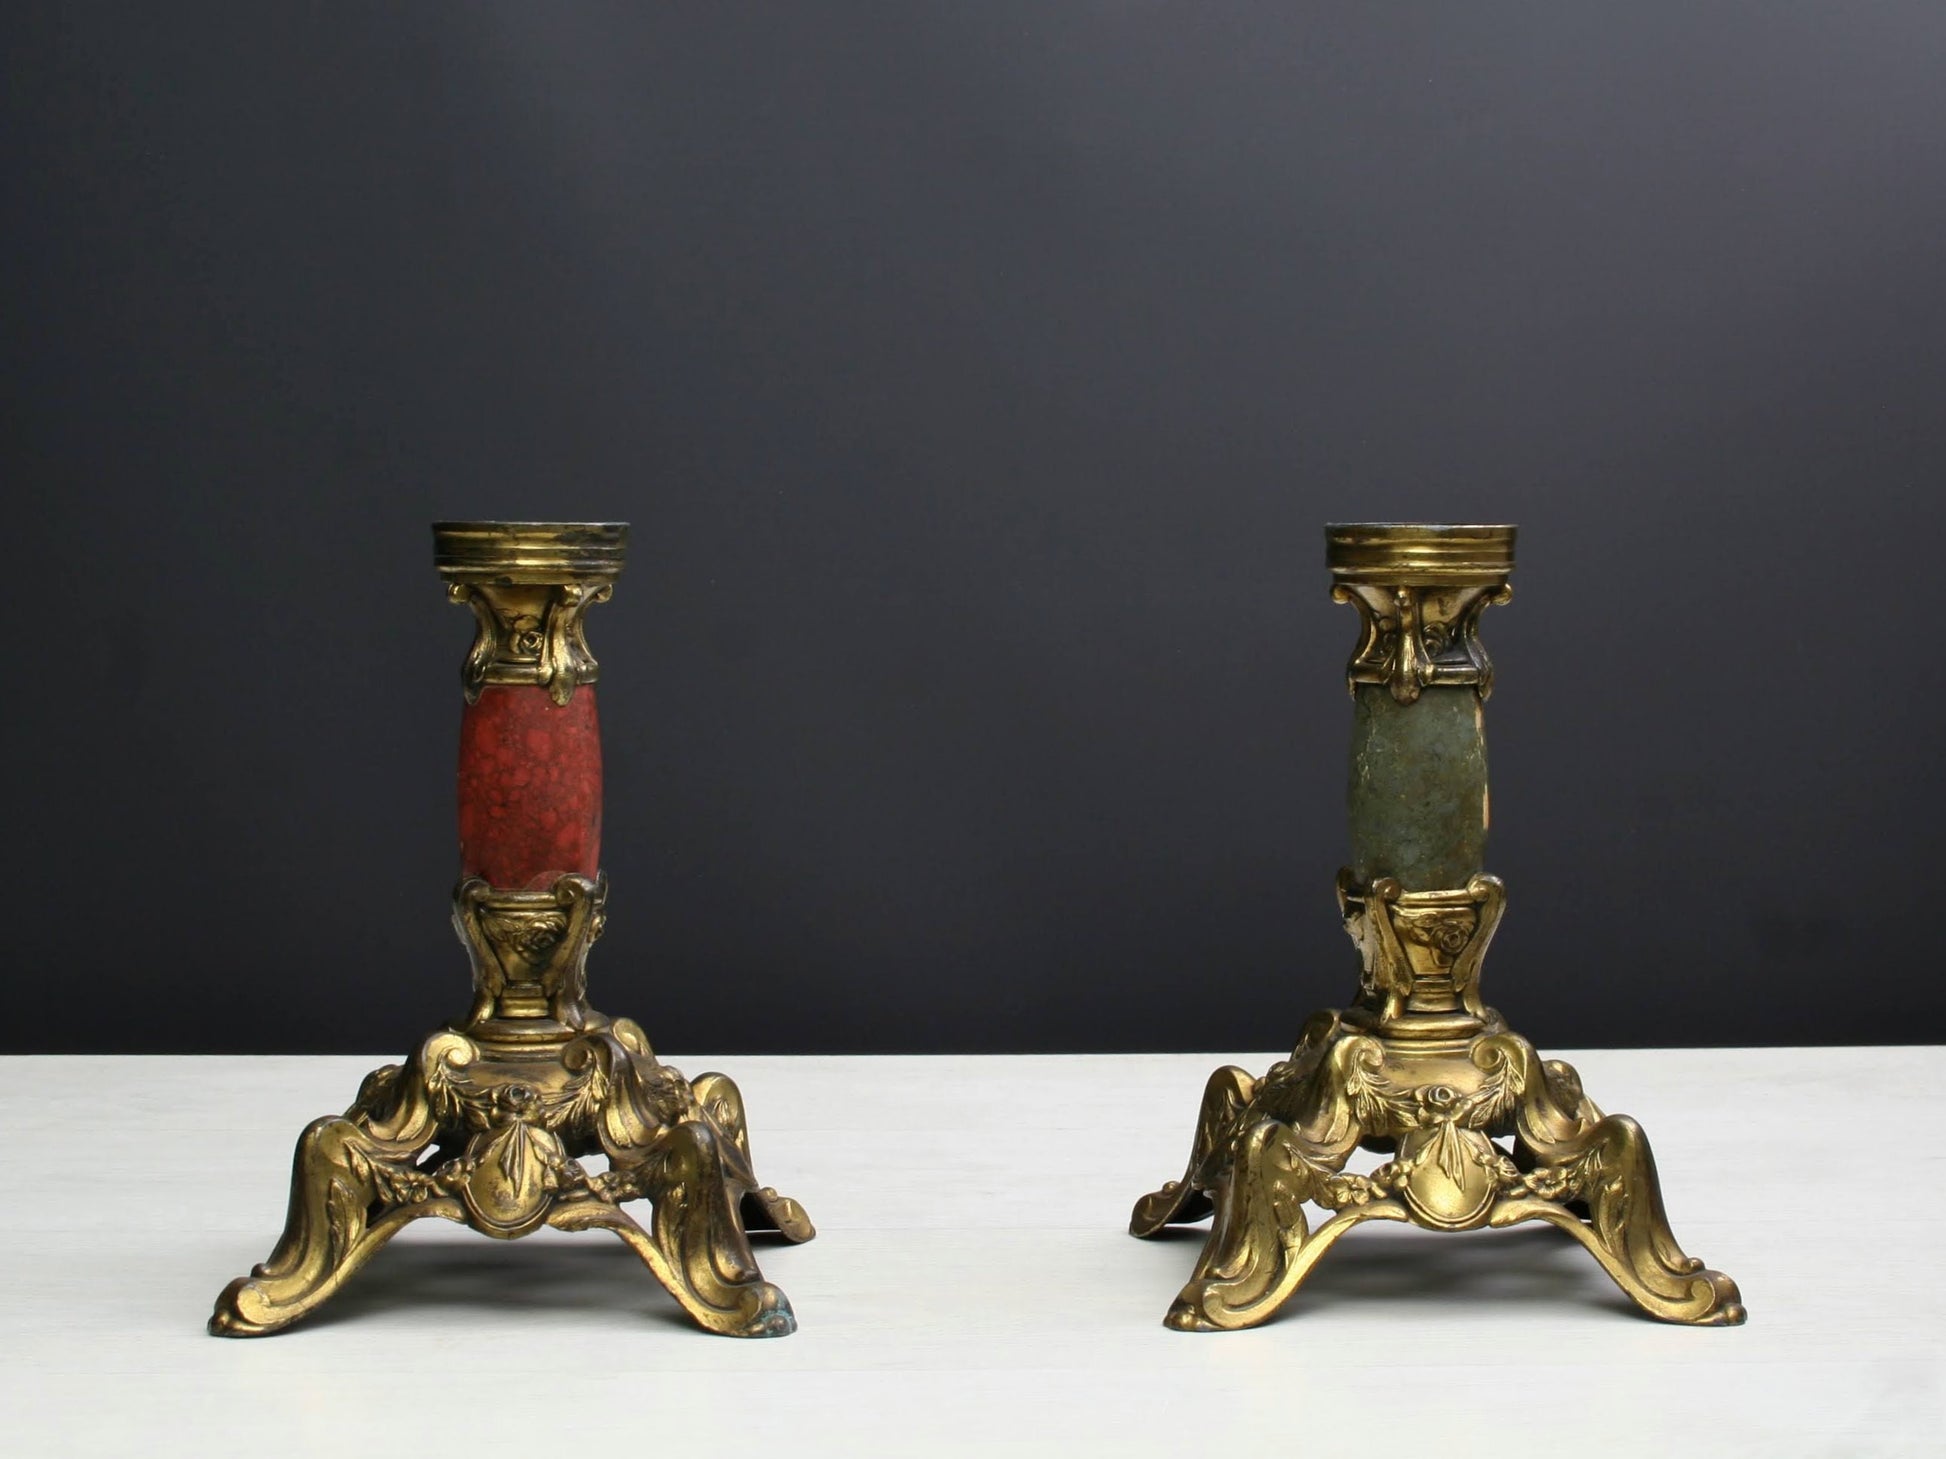 Antique Candleholder Set | Stunning Candle Holders for Table Decor Candle Centerpiece | Mantel Decor Candleholder